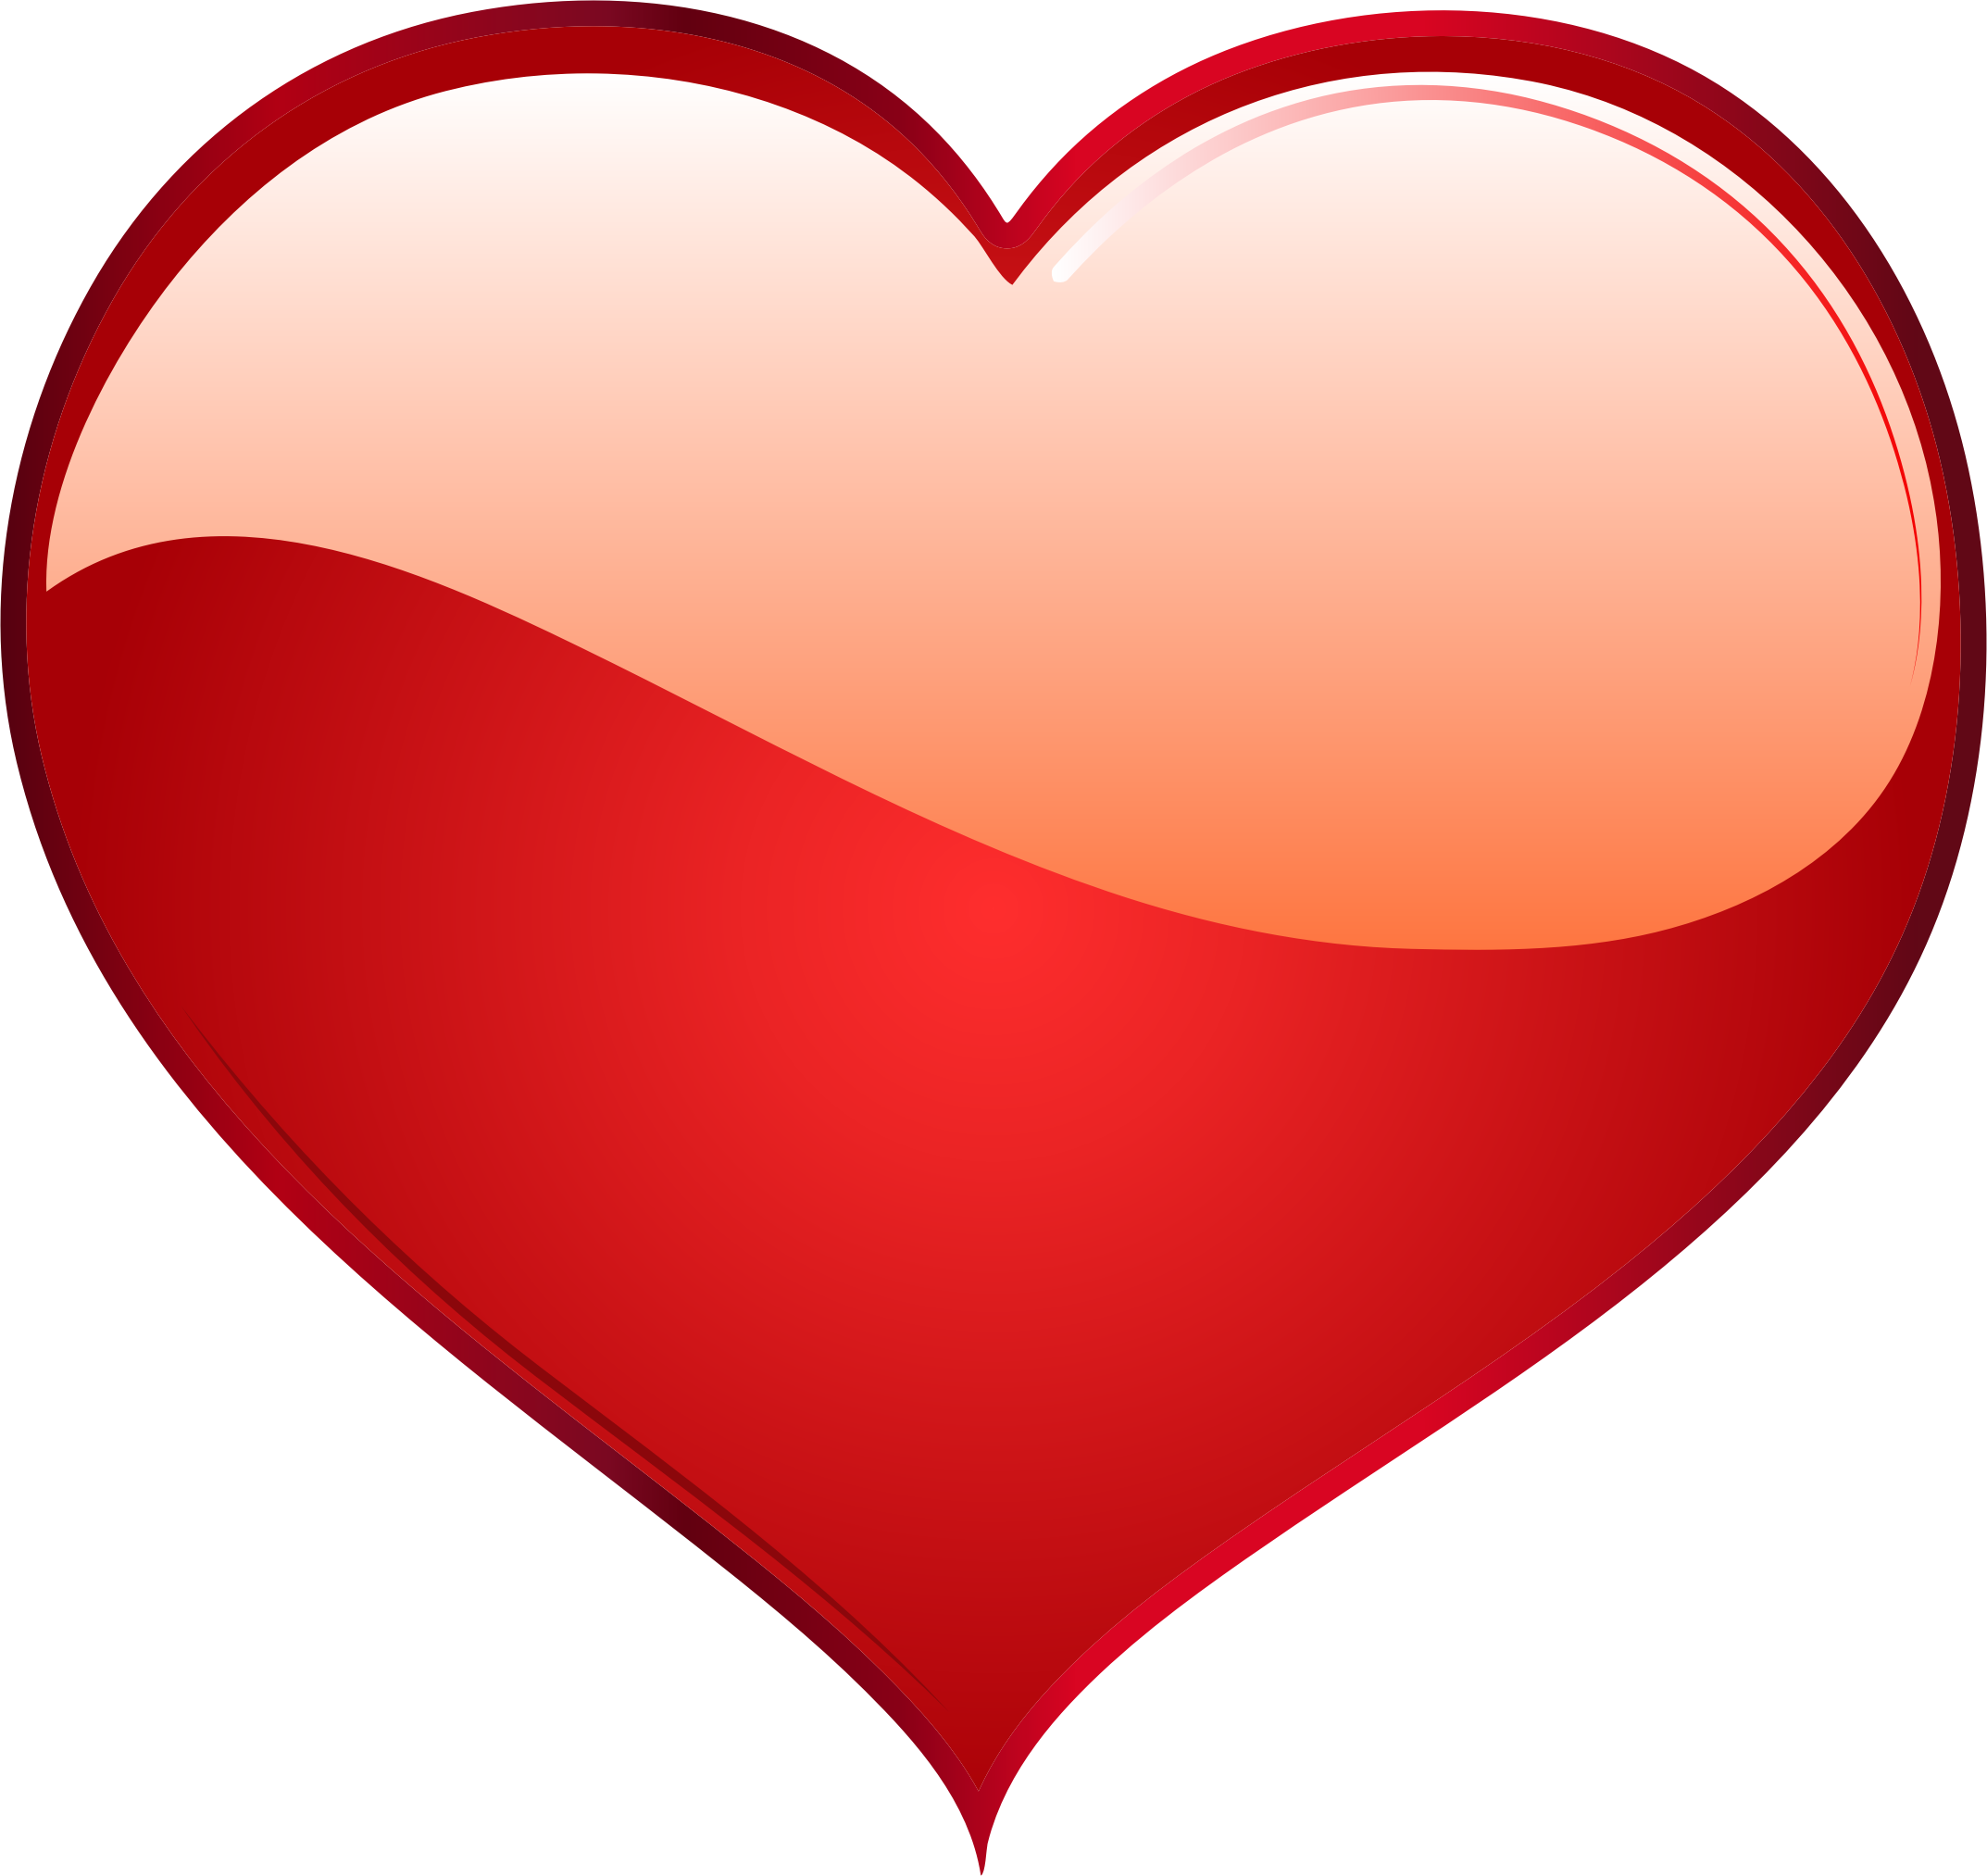 Big Red Heart Picture - Tierno Imagenes De Amor (2146x2026)